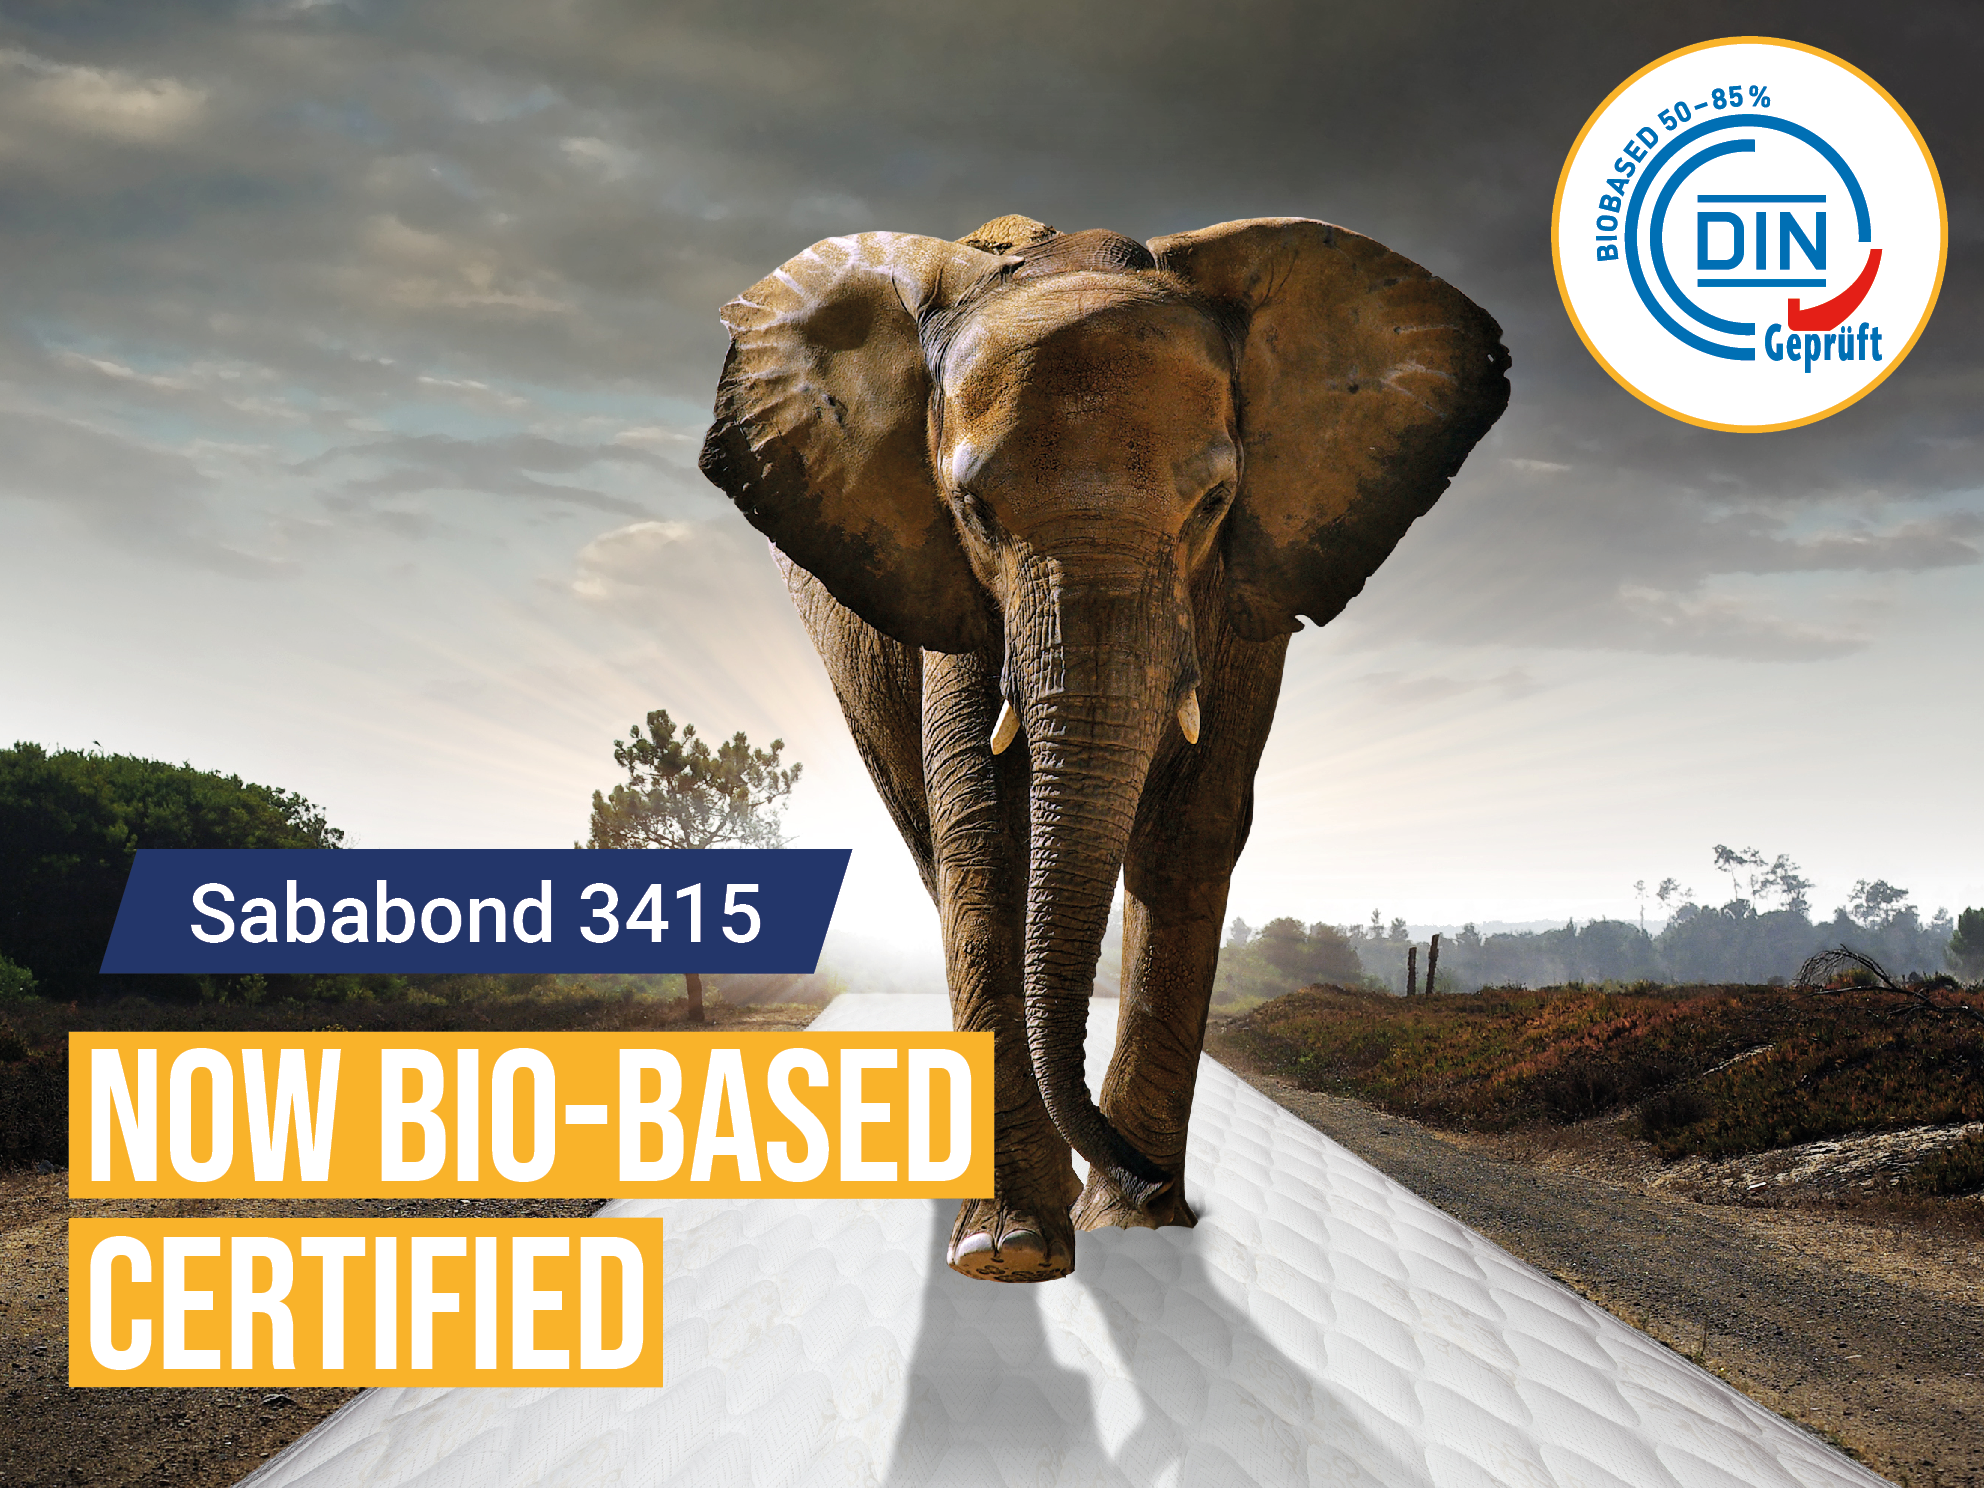 Sababond 3415 now certified bio-based! 💚